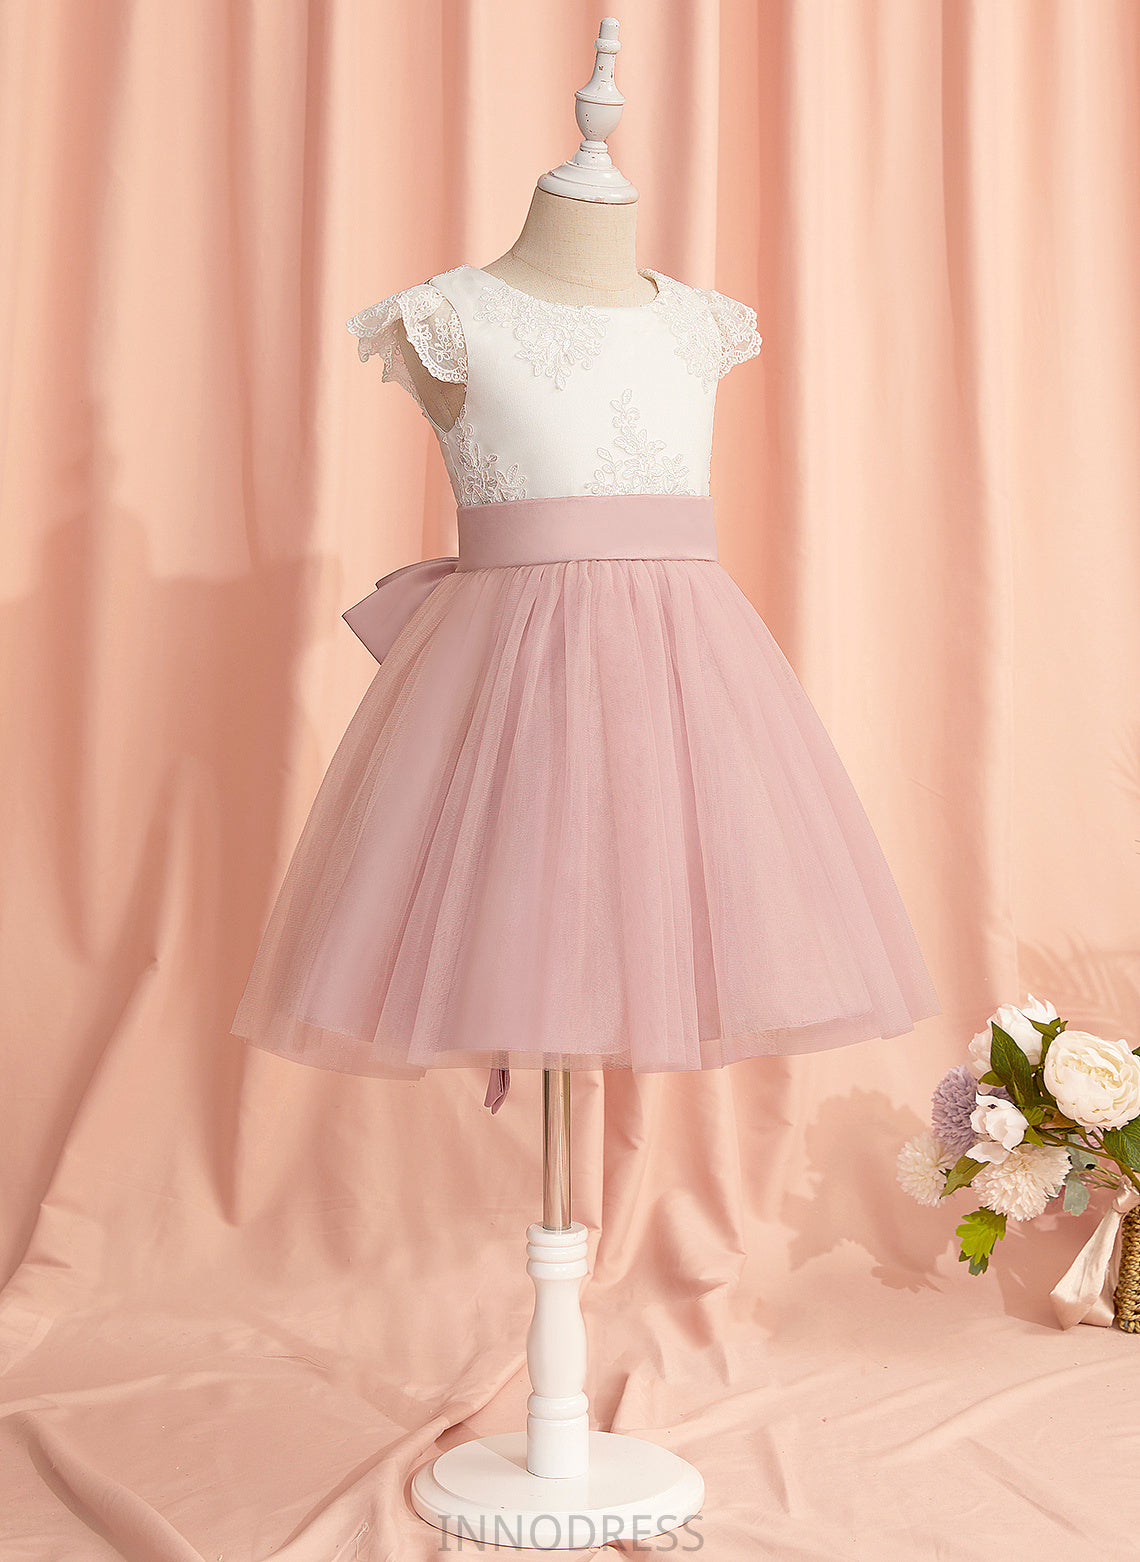 - Knee-length Dress Lace/Bow(s) Maren Sleeves Neck Girl Tulle With Scoop Flower Girl Dresses Short A-Line Flower